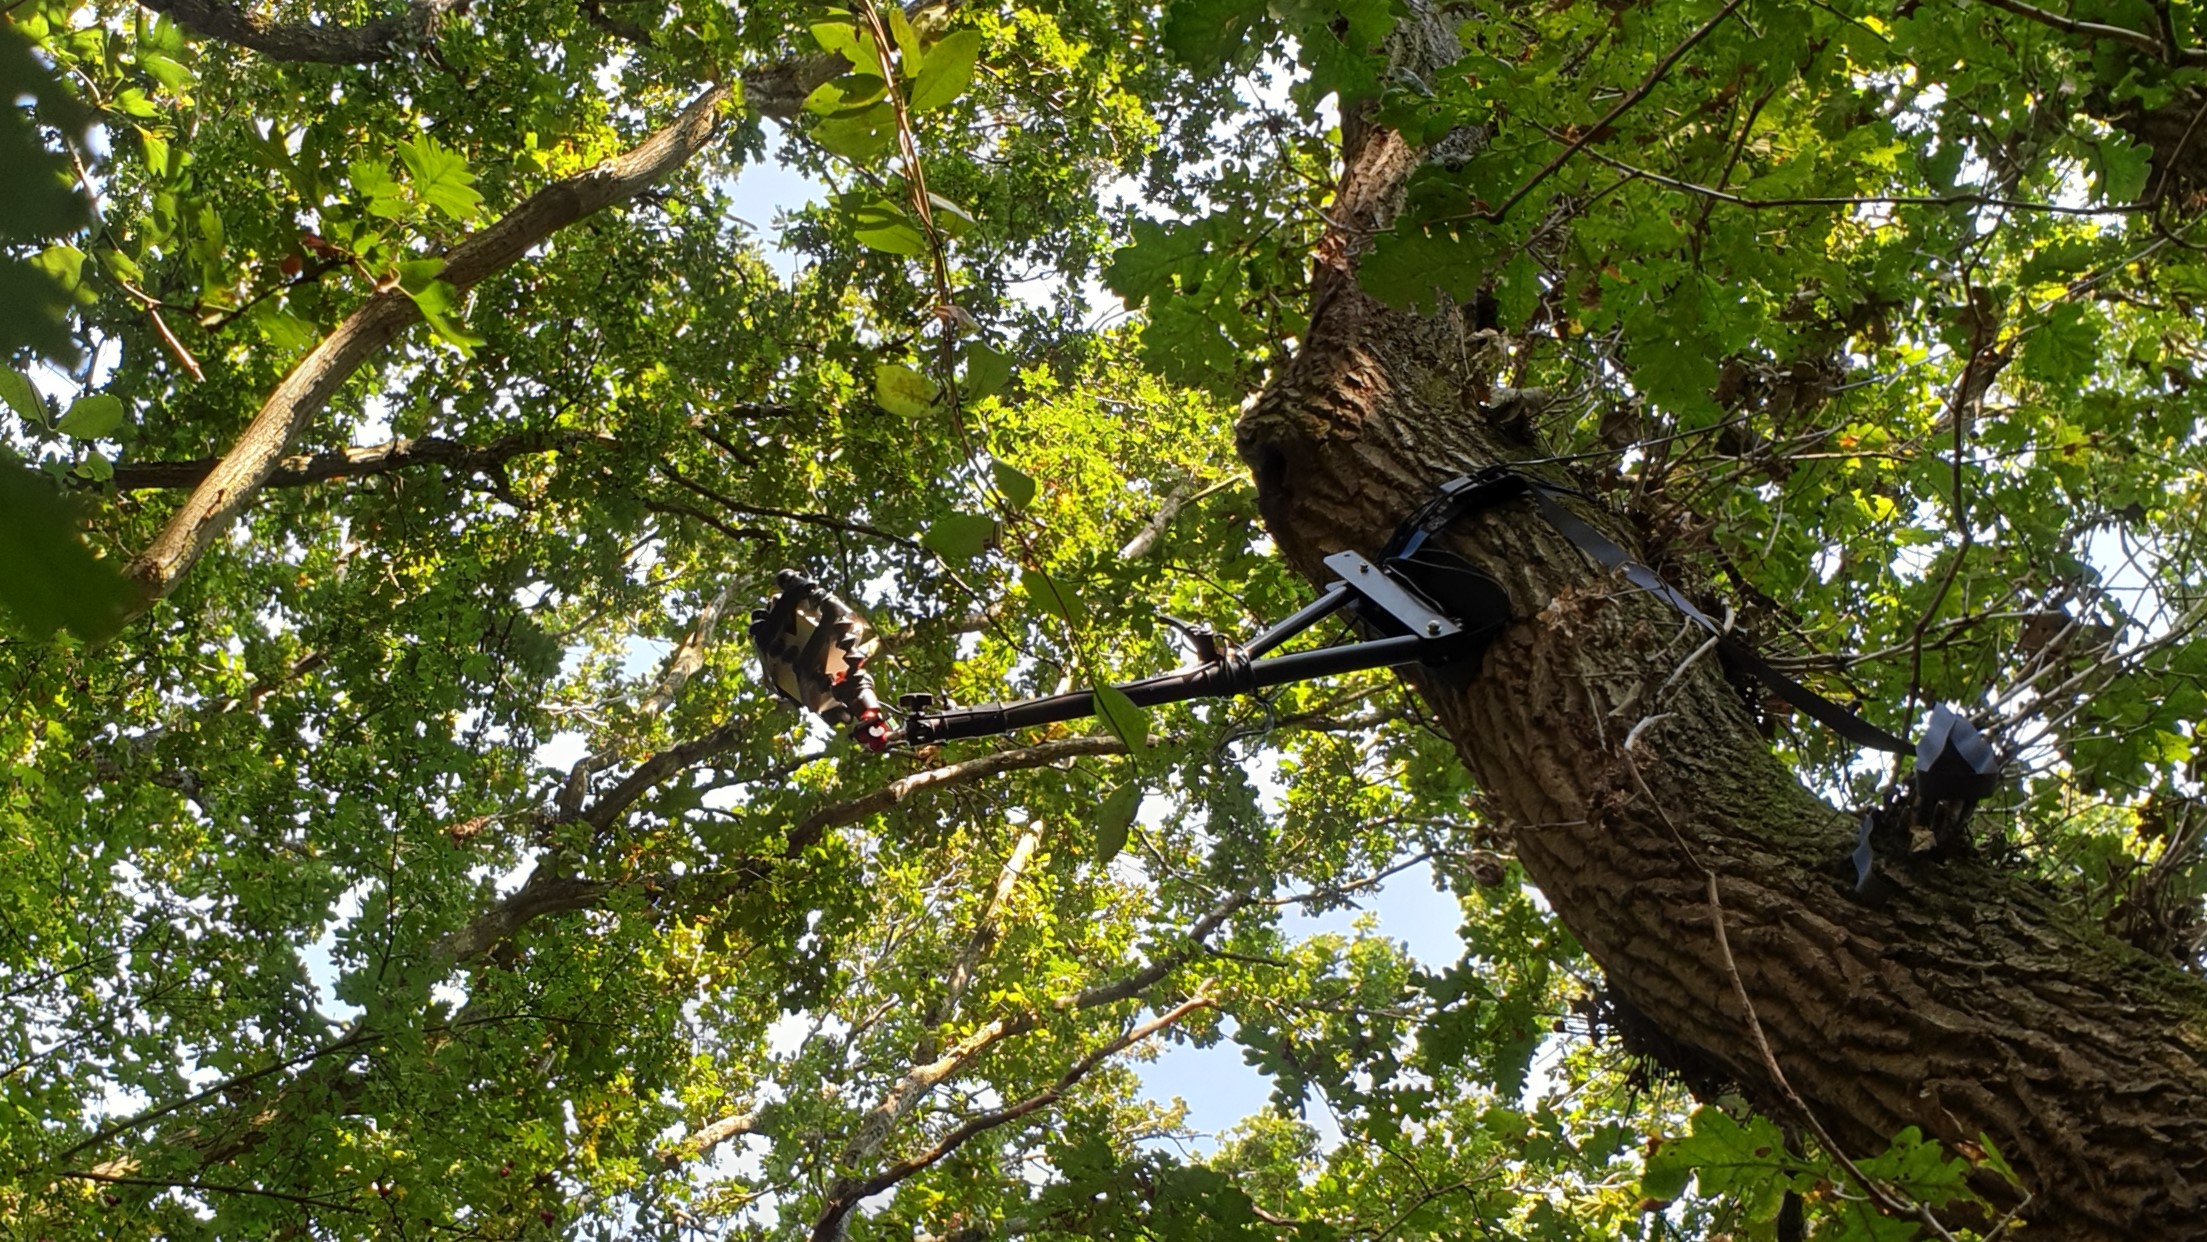 Camera mounted on a boom arm on a mature oak stem